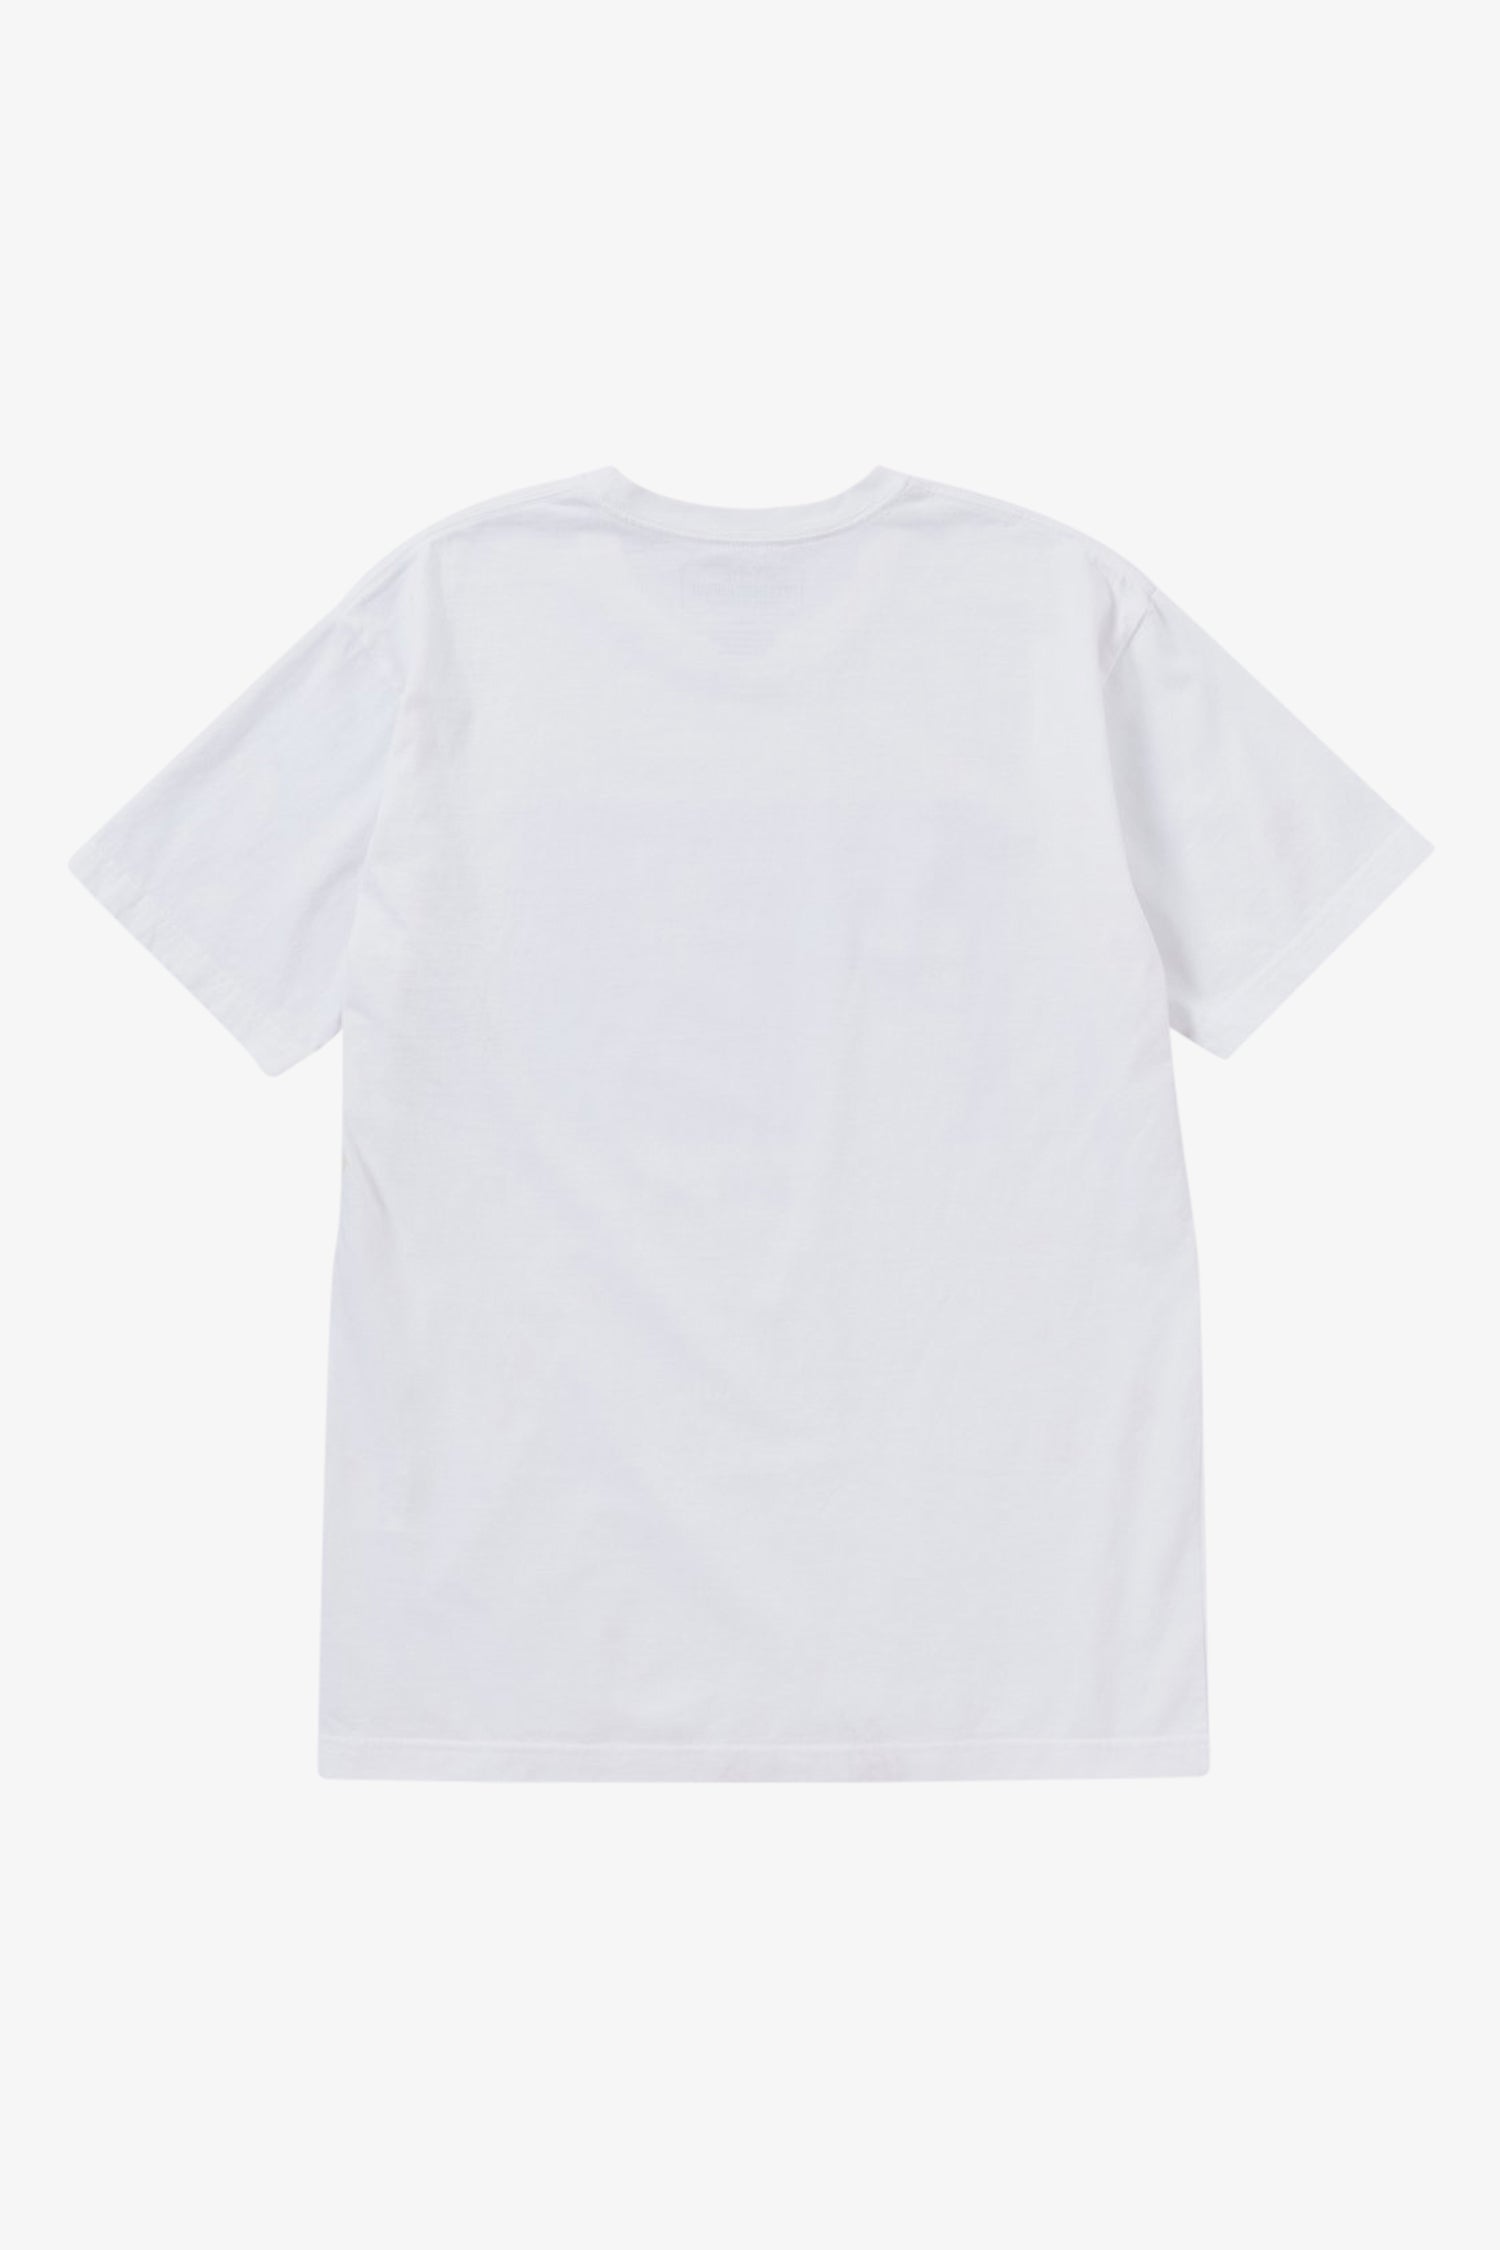 Selectshop FRAME - NEIGHBORHOOD NHON-3 T-Shirt T-Shirt Dubai